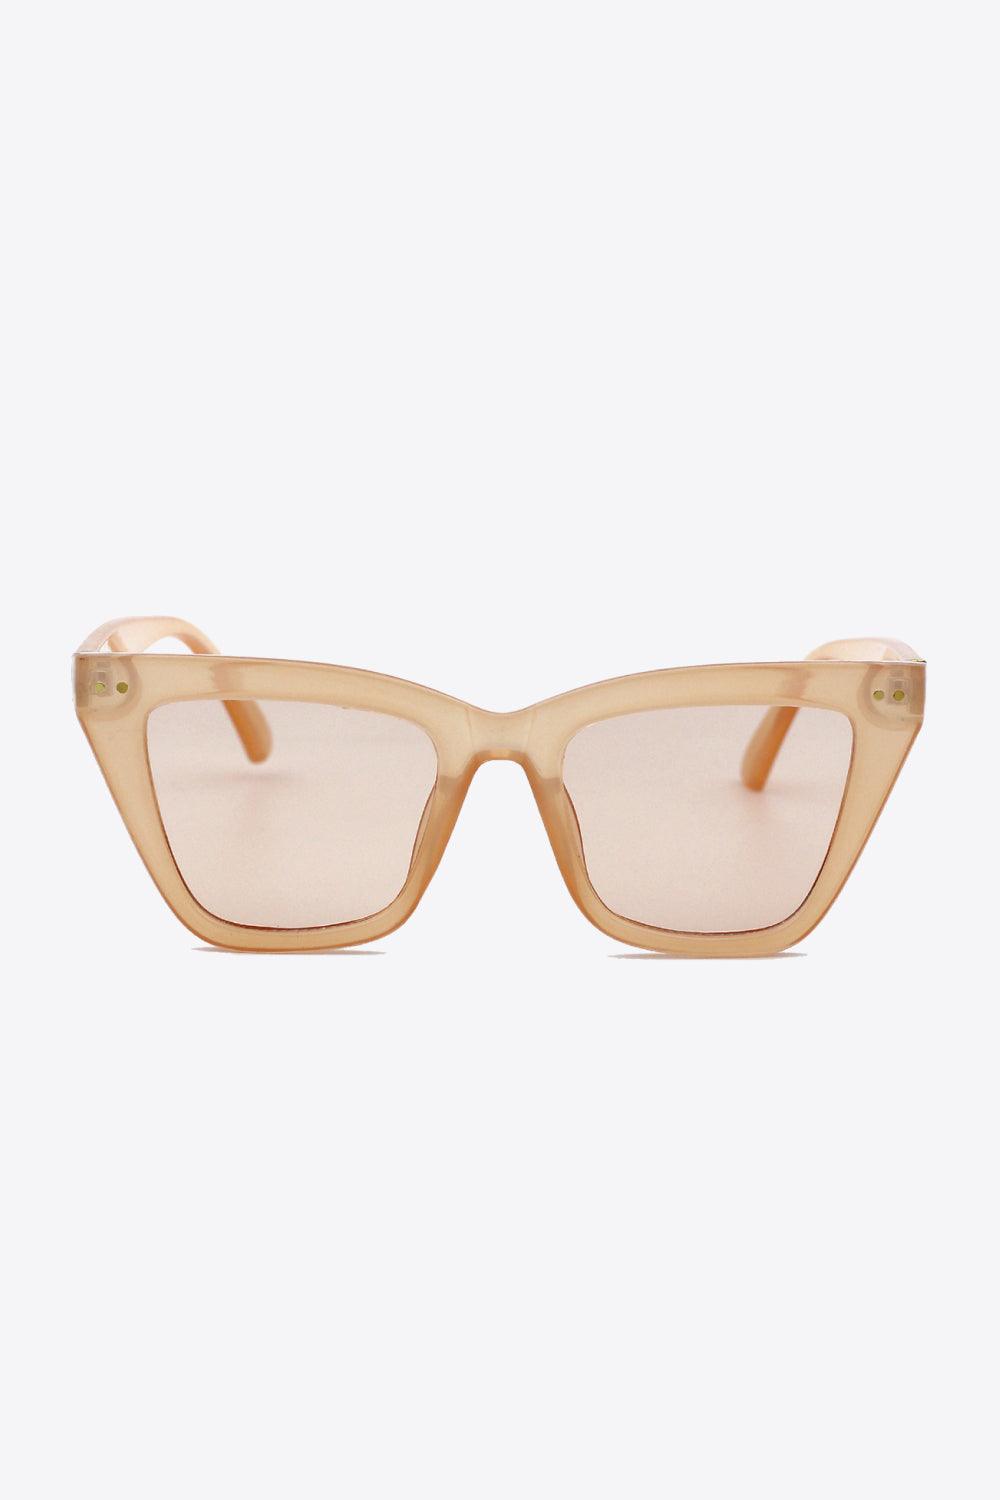 UV400 Polycarbonate Frame Sunglasses - Olive Ave